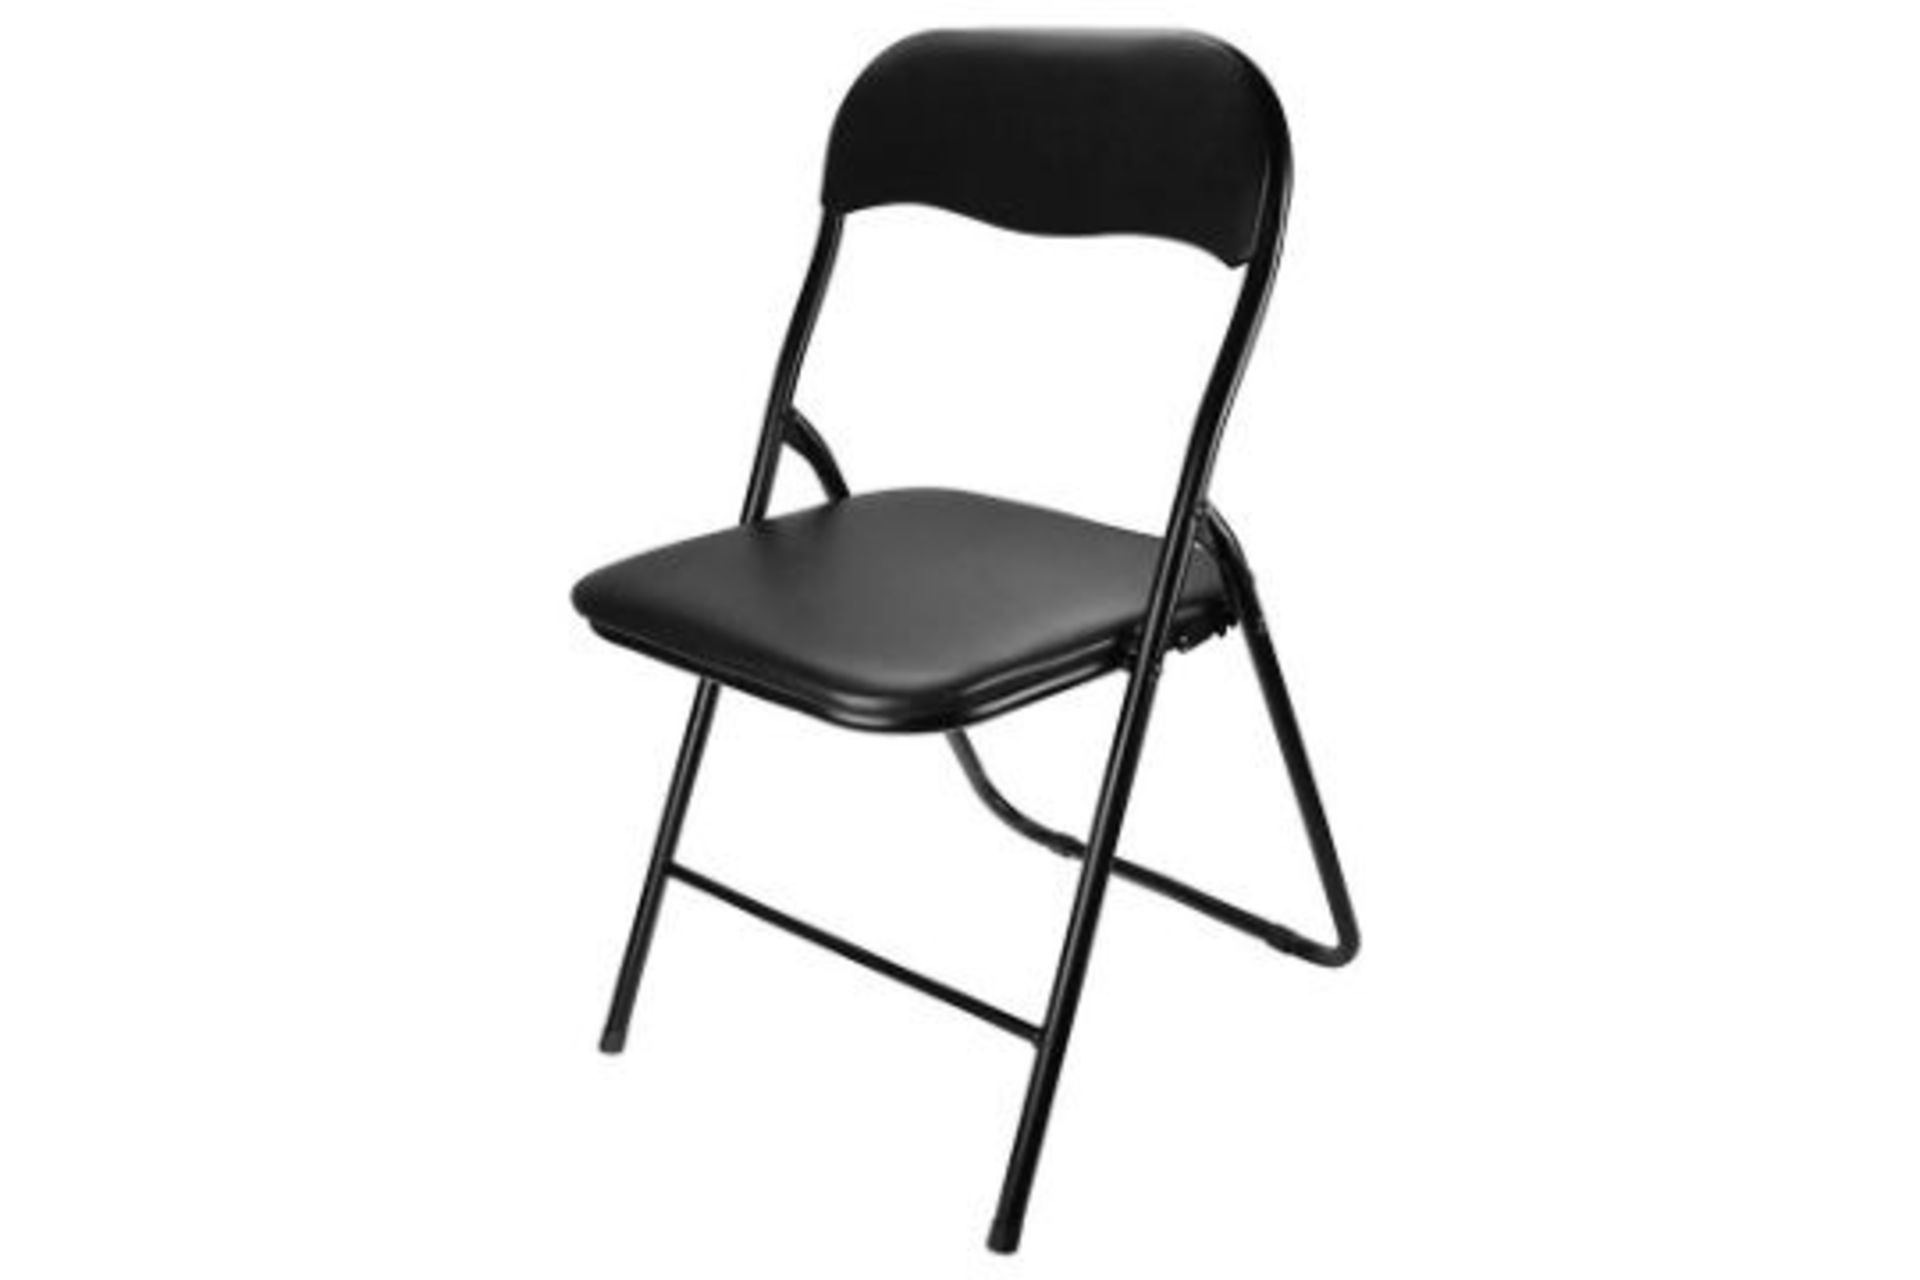 Folding Breakfast Bar Stool Office Chair Seat Foldable Light Weight Space Saving - ER45